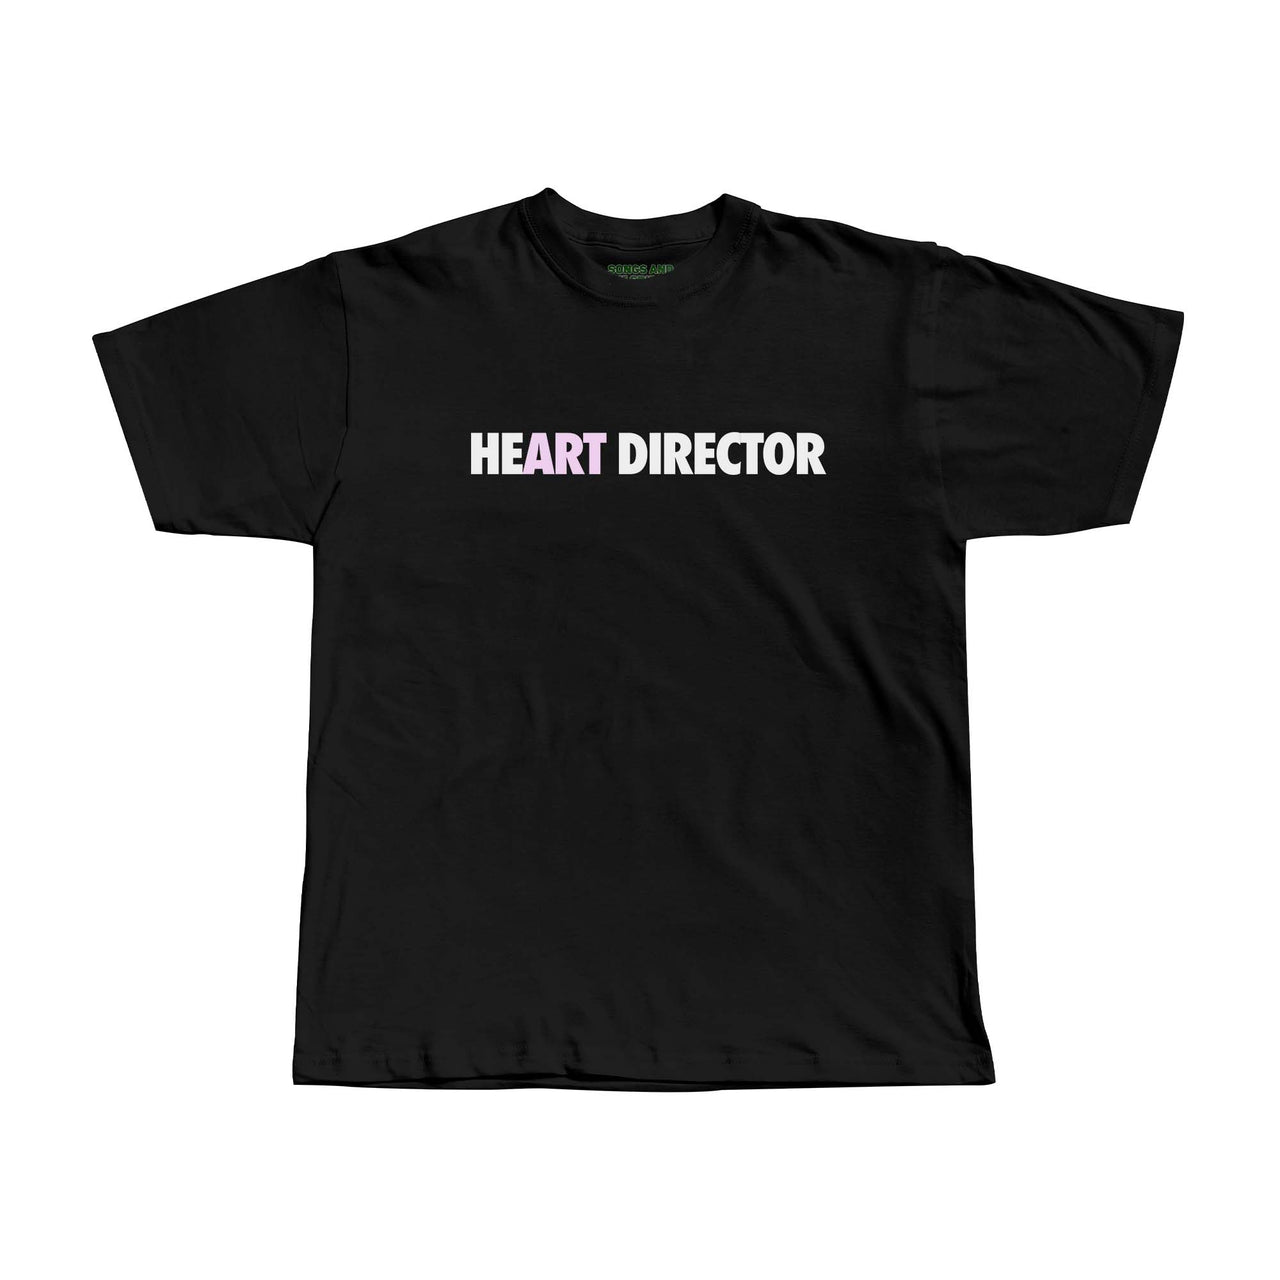 Heart Director Tee